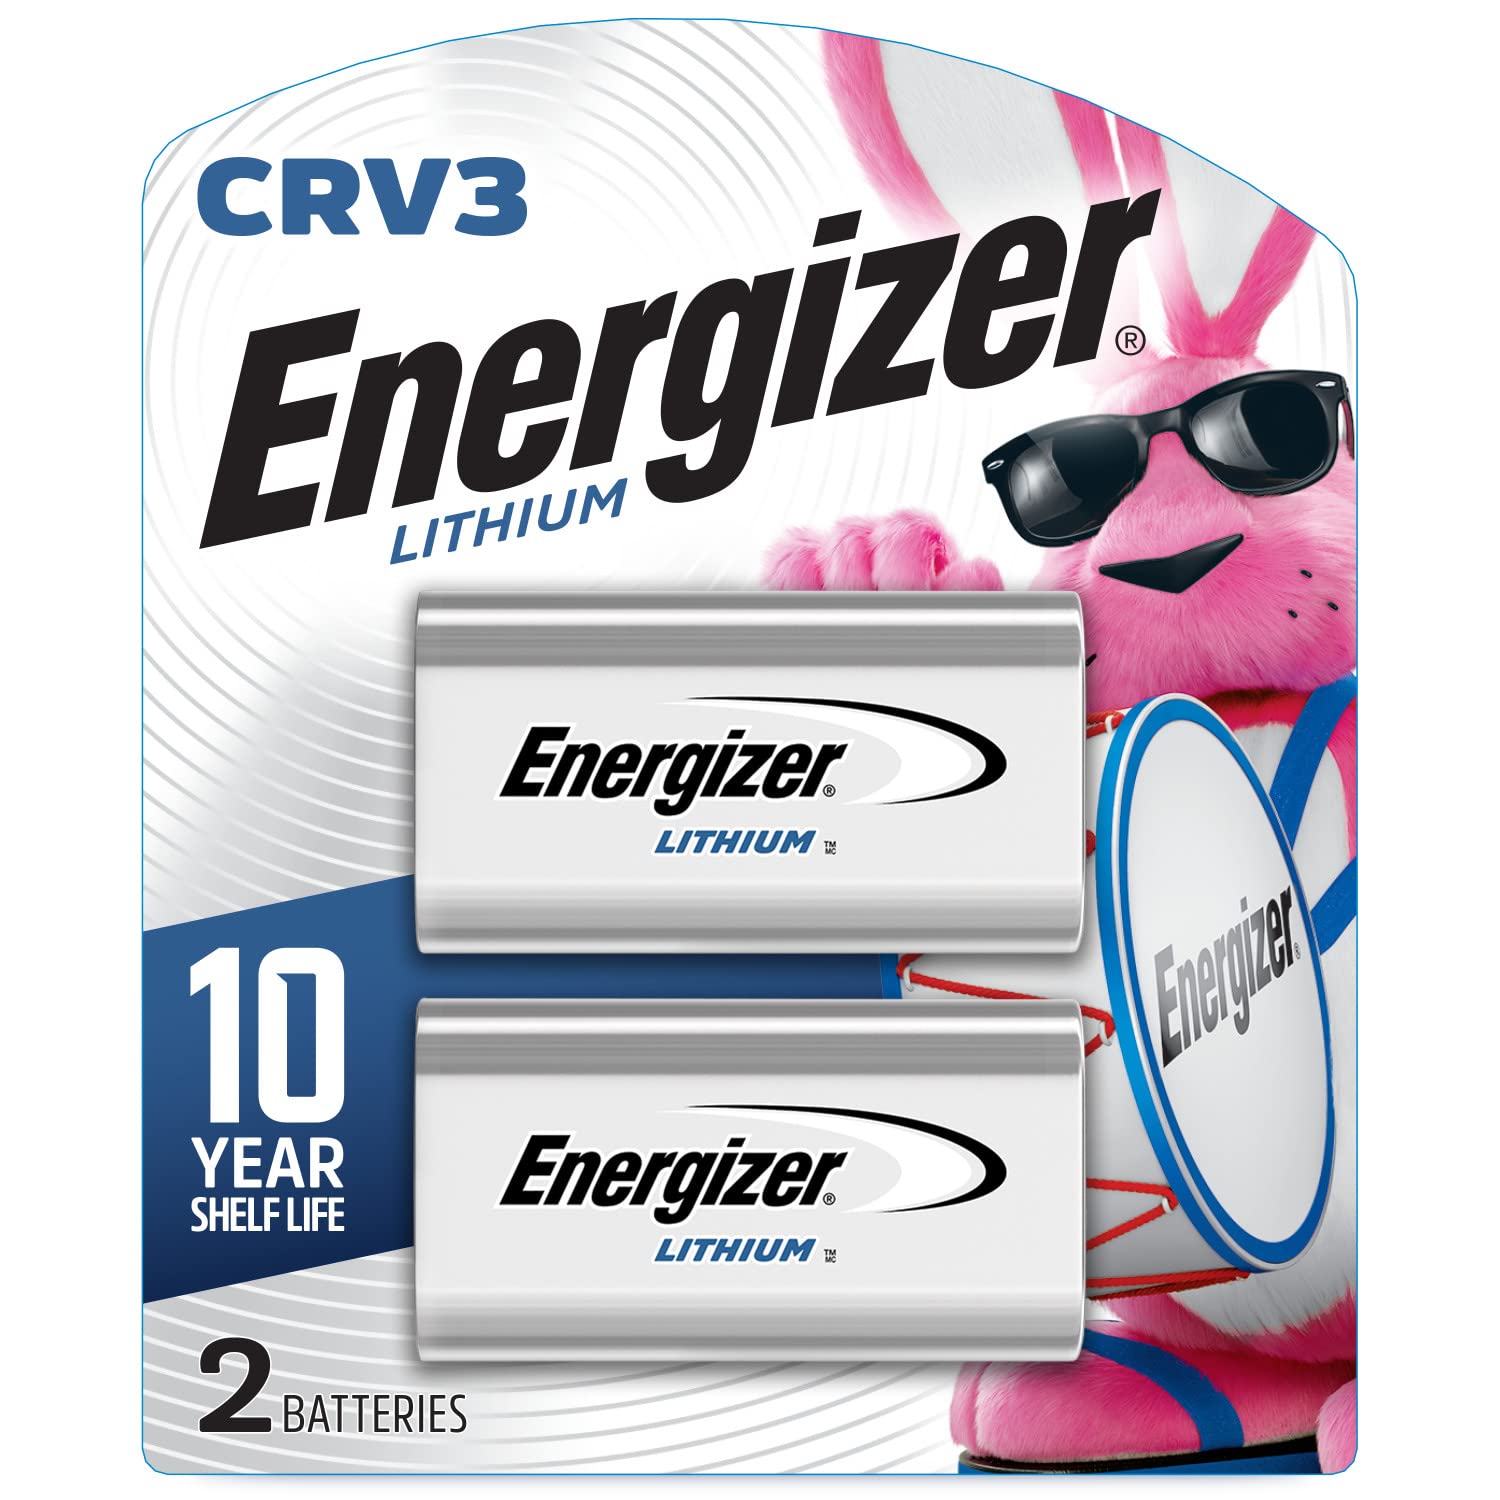 Energizer CRV3 Batteries, 2 Pack